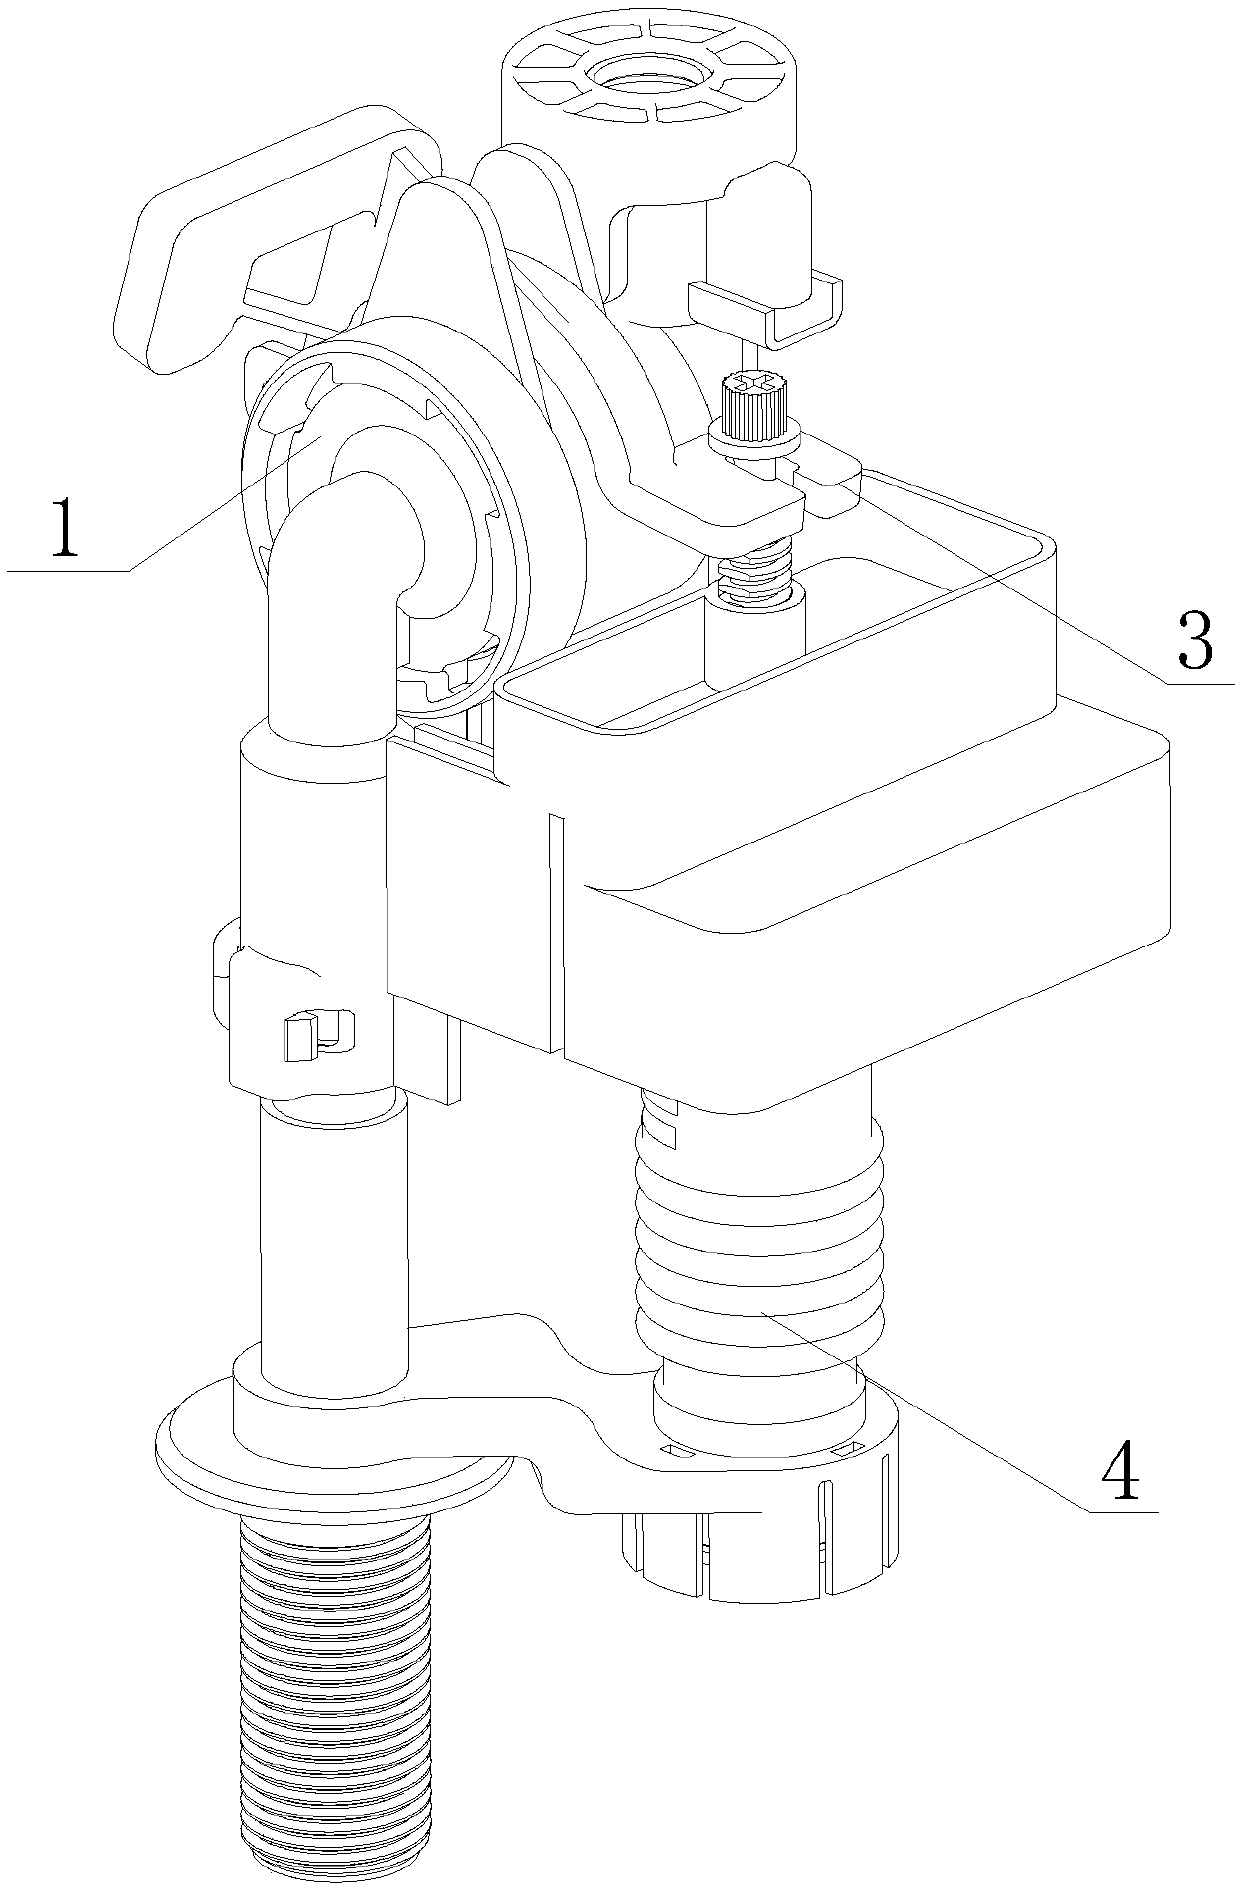 Delayed water inlet mechanism